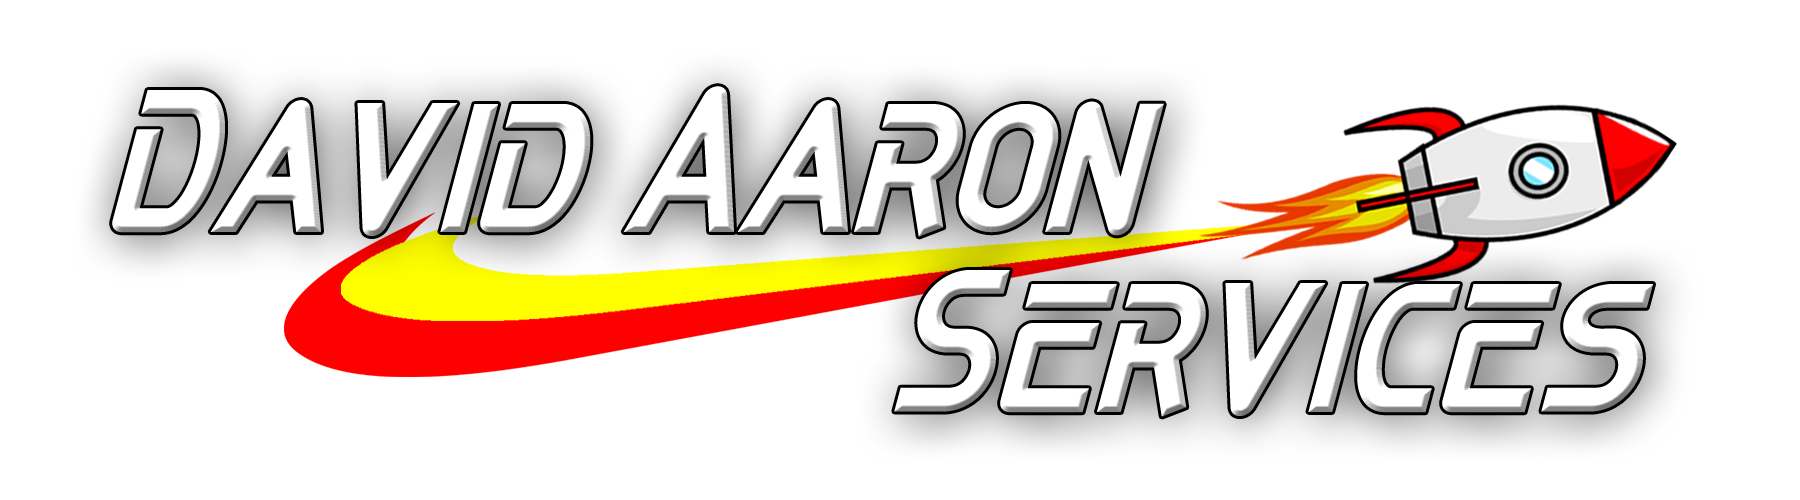 David Aaron Services Logo